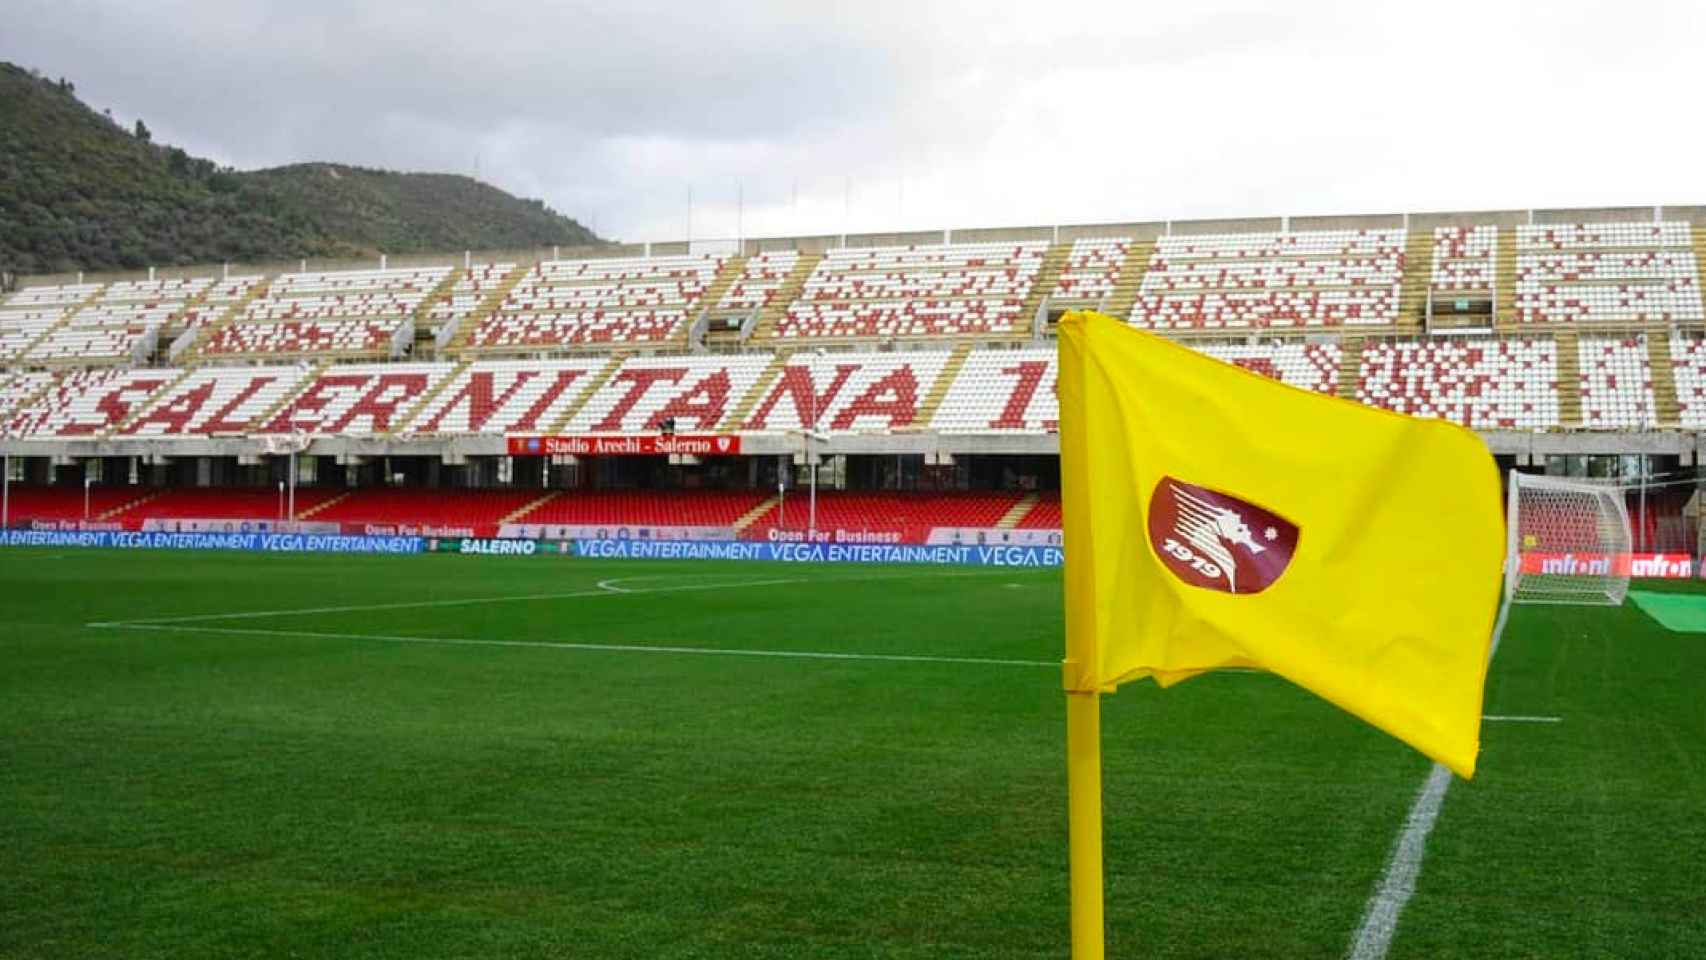 Estadio del Salernitana